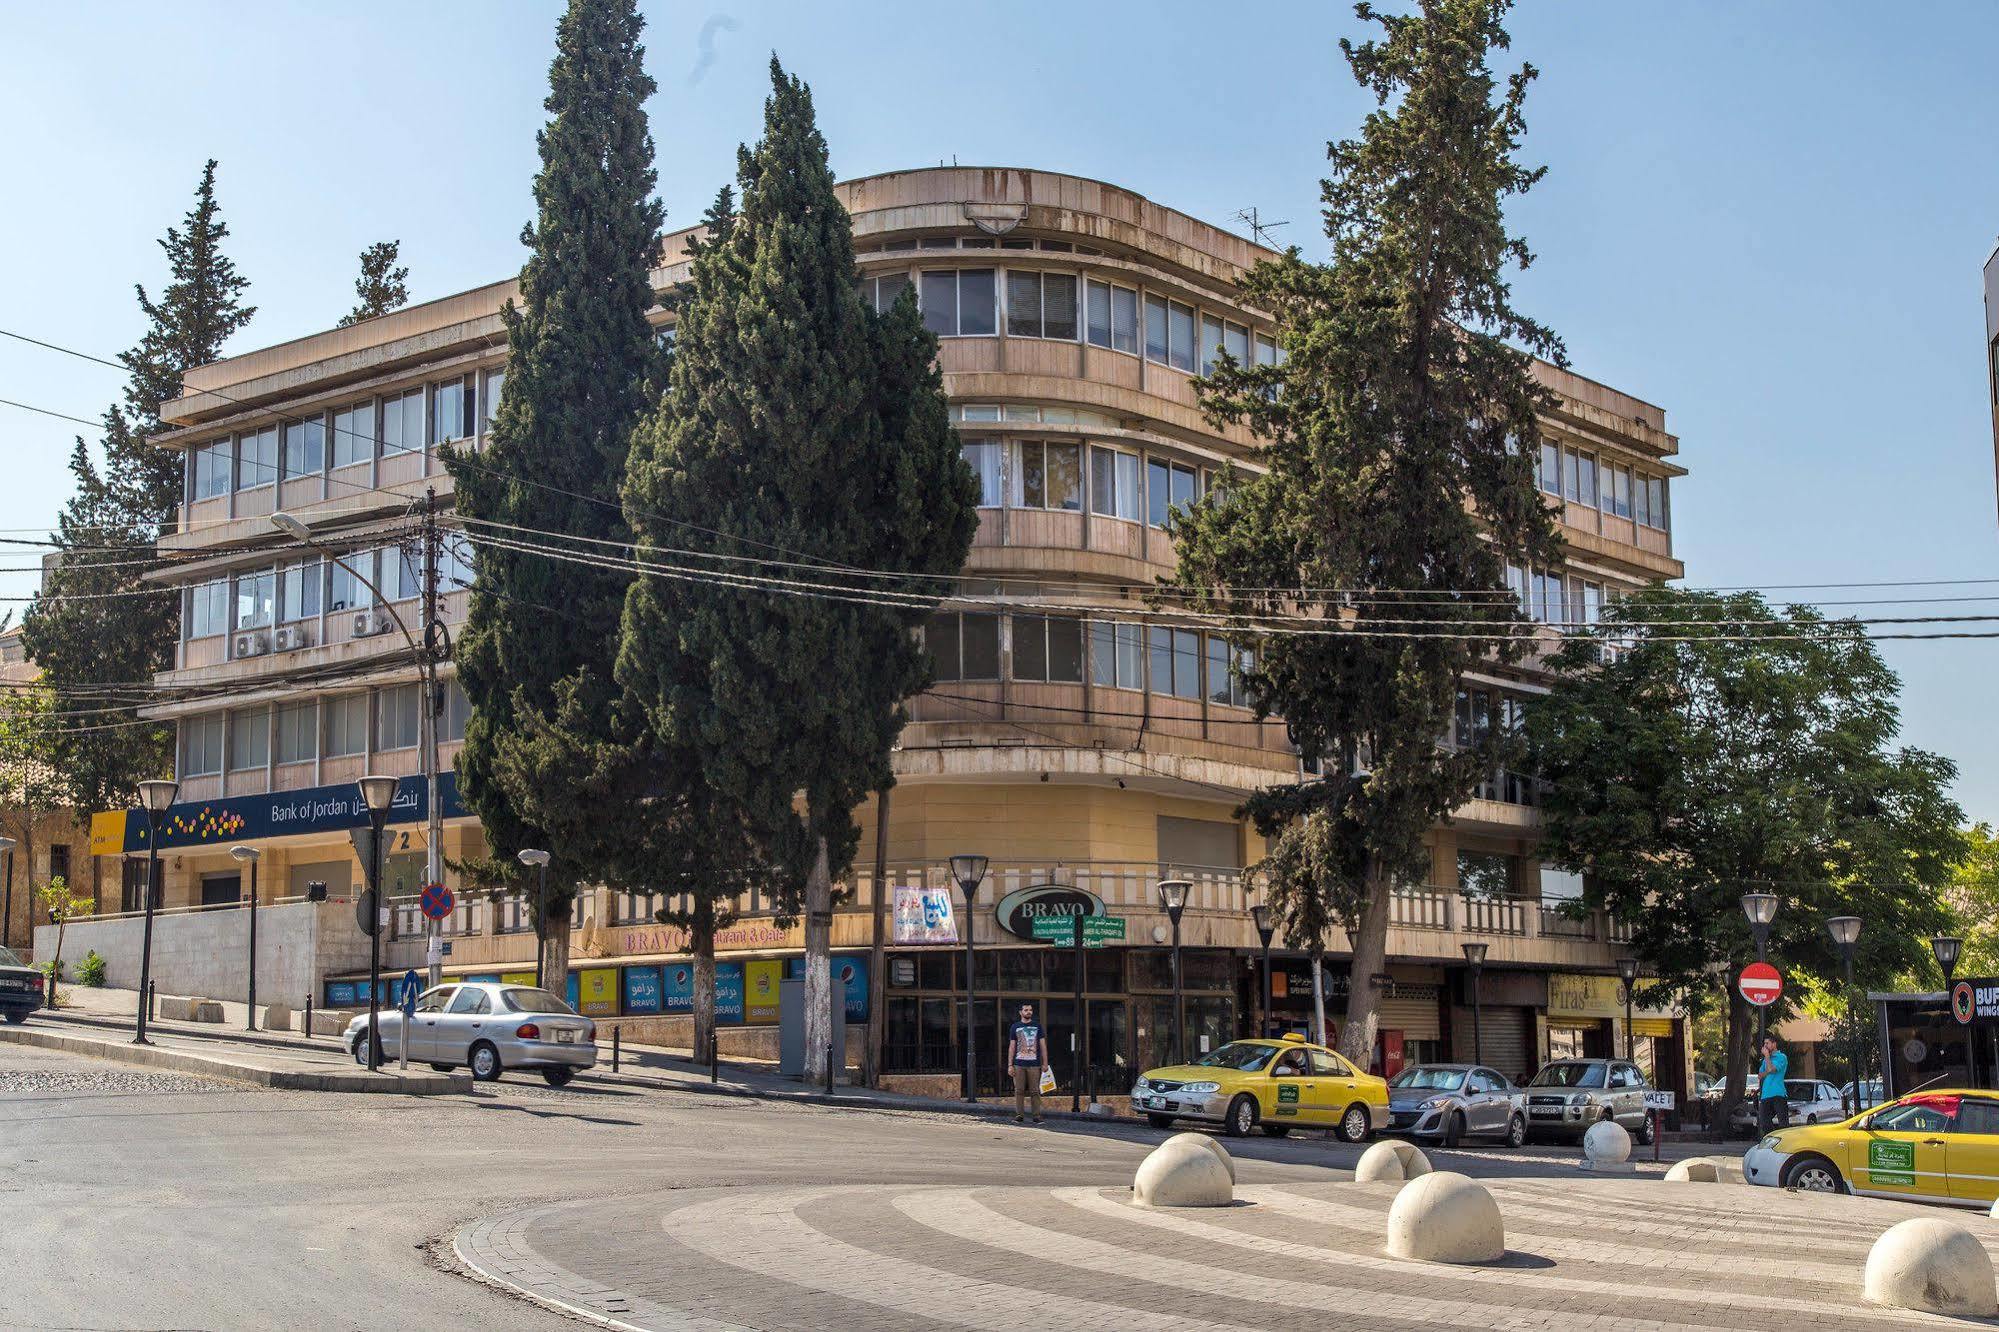 Antika Amman Hotel Экстерьер фото